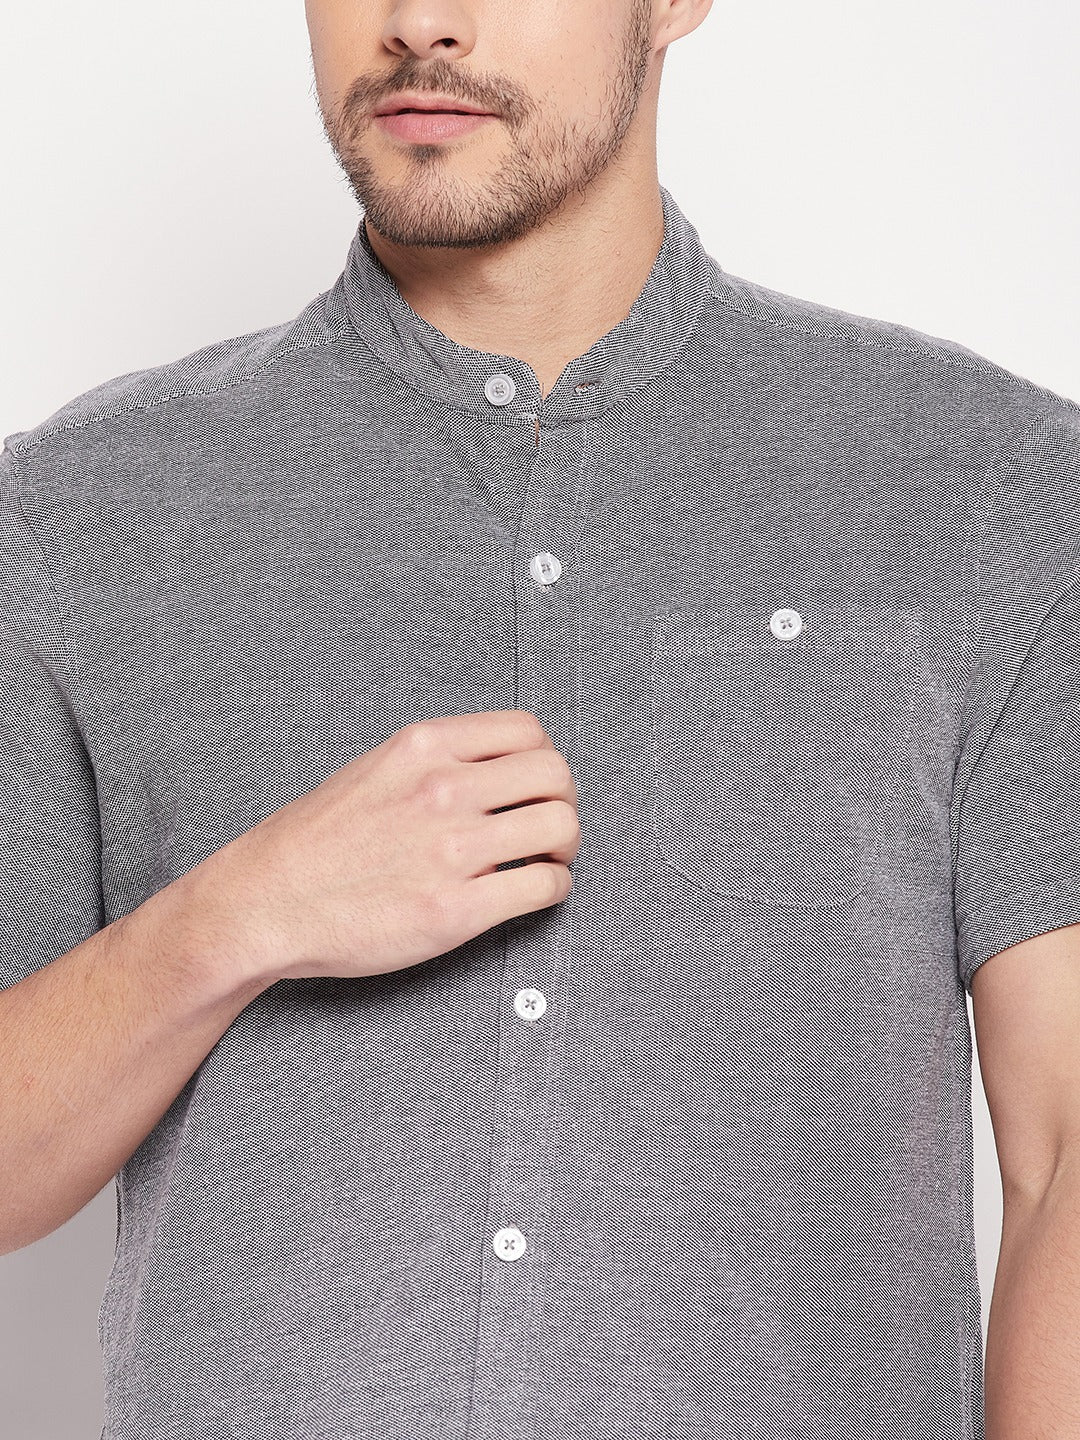 Grey Knitted Shirt - clubyork